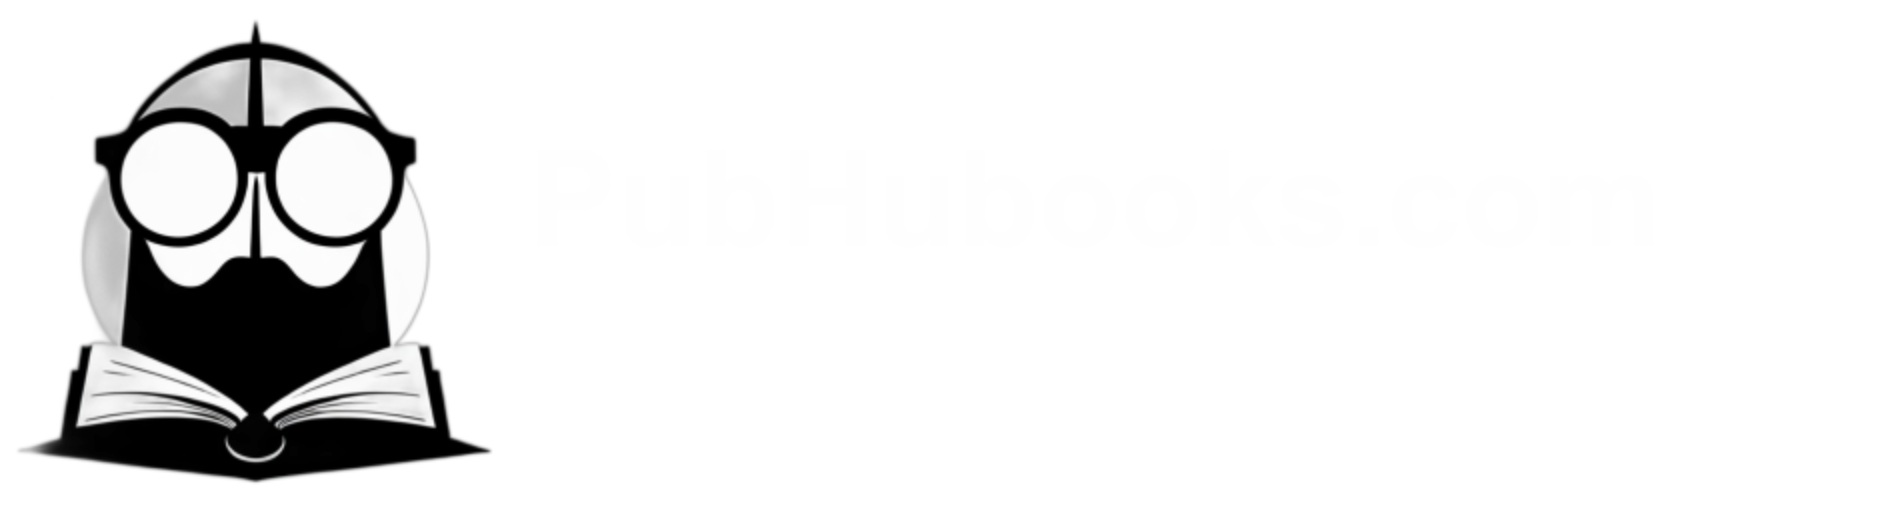 PubHubooks.com